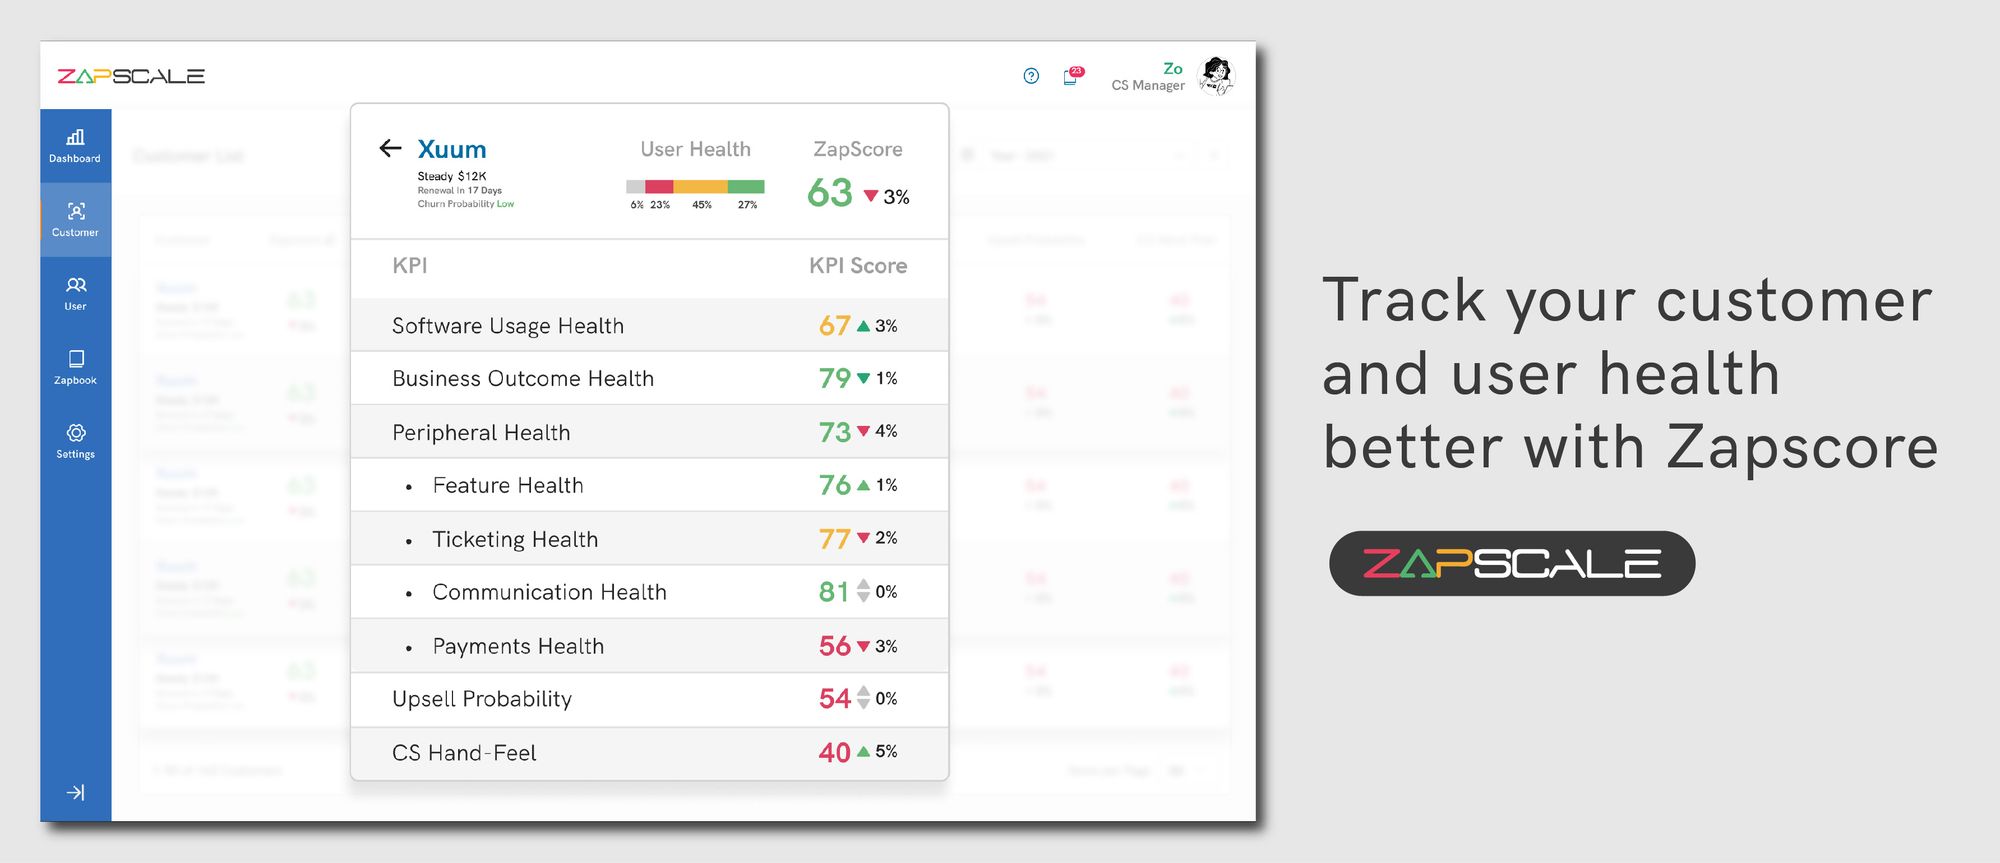 ZapScale's (the customer success platform) comprehensive customer health scoring